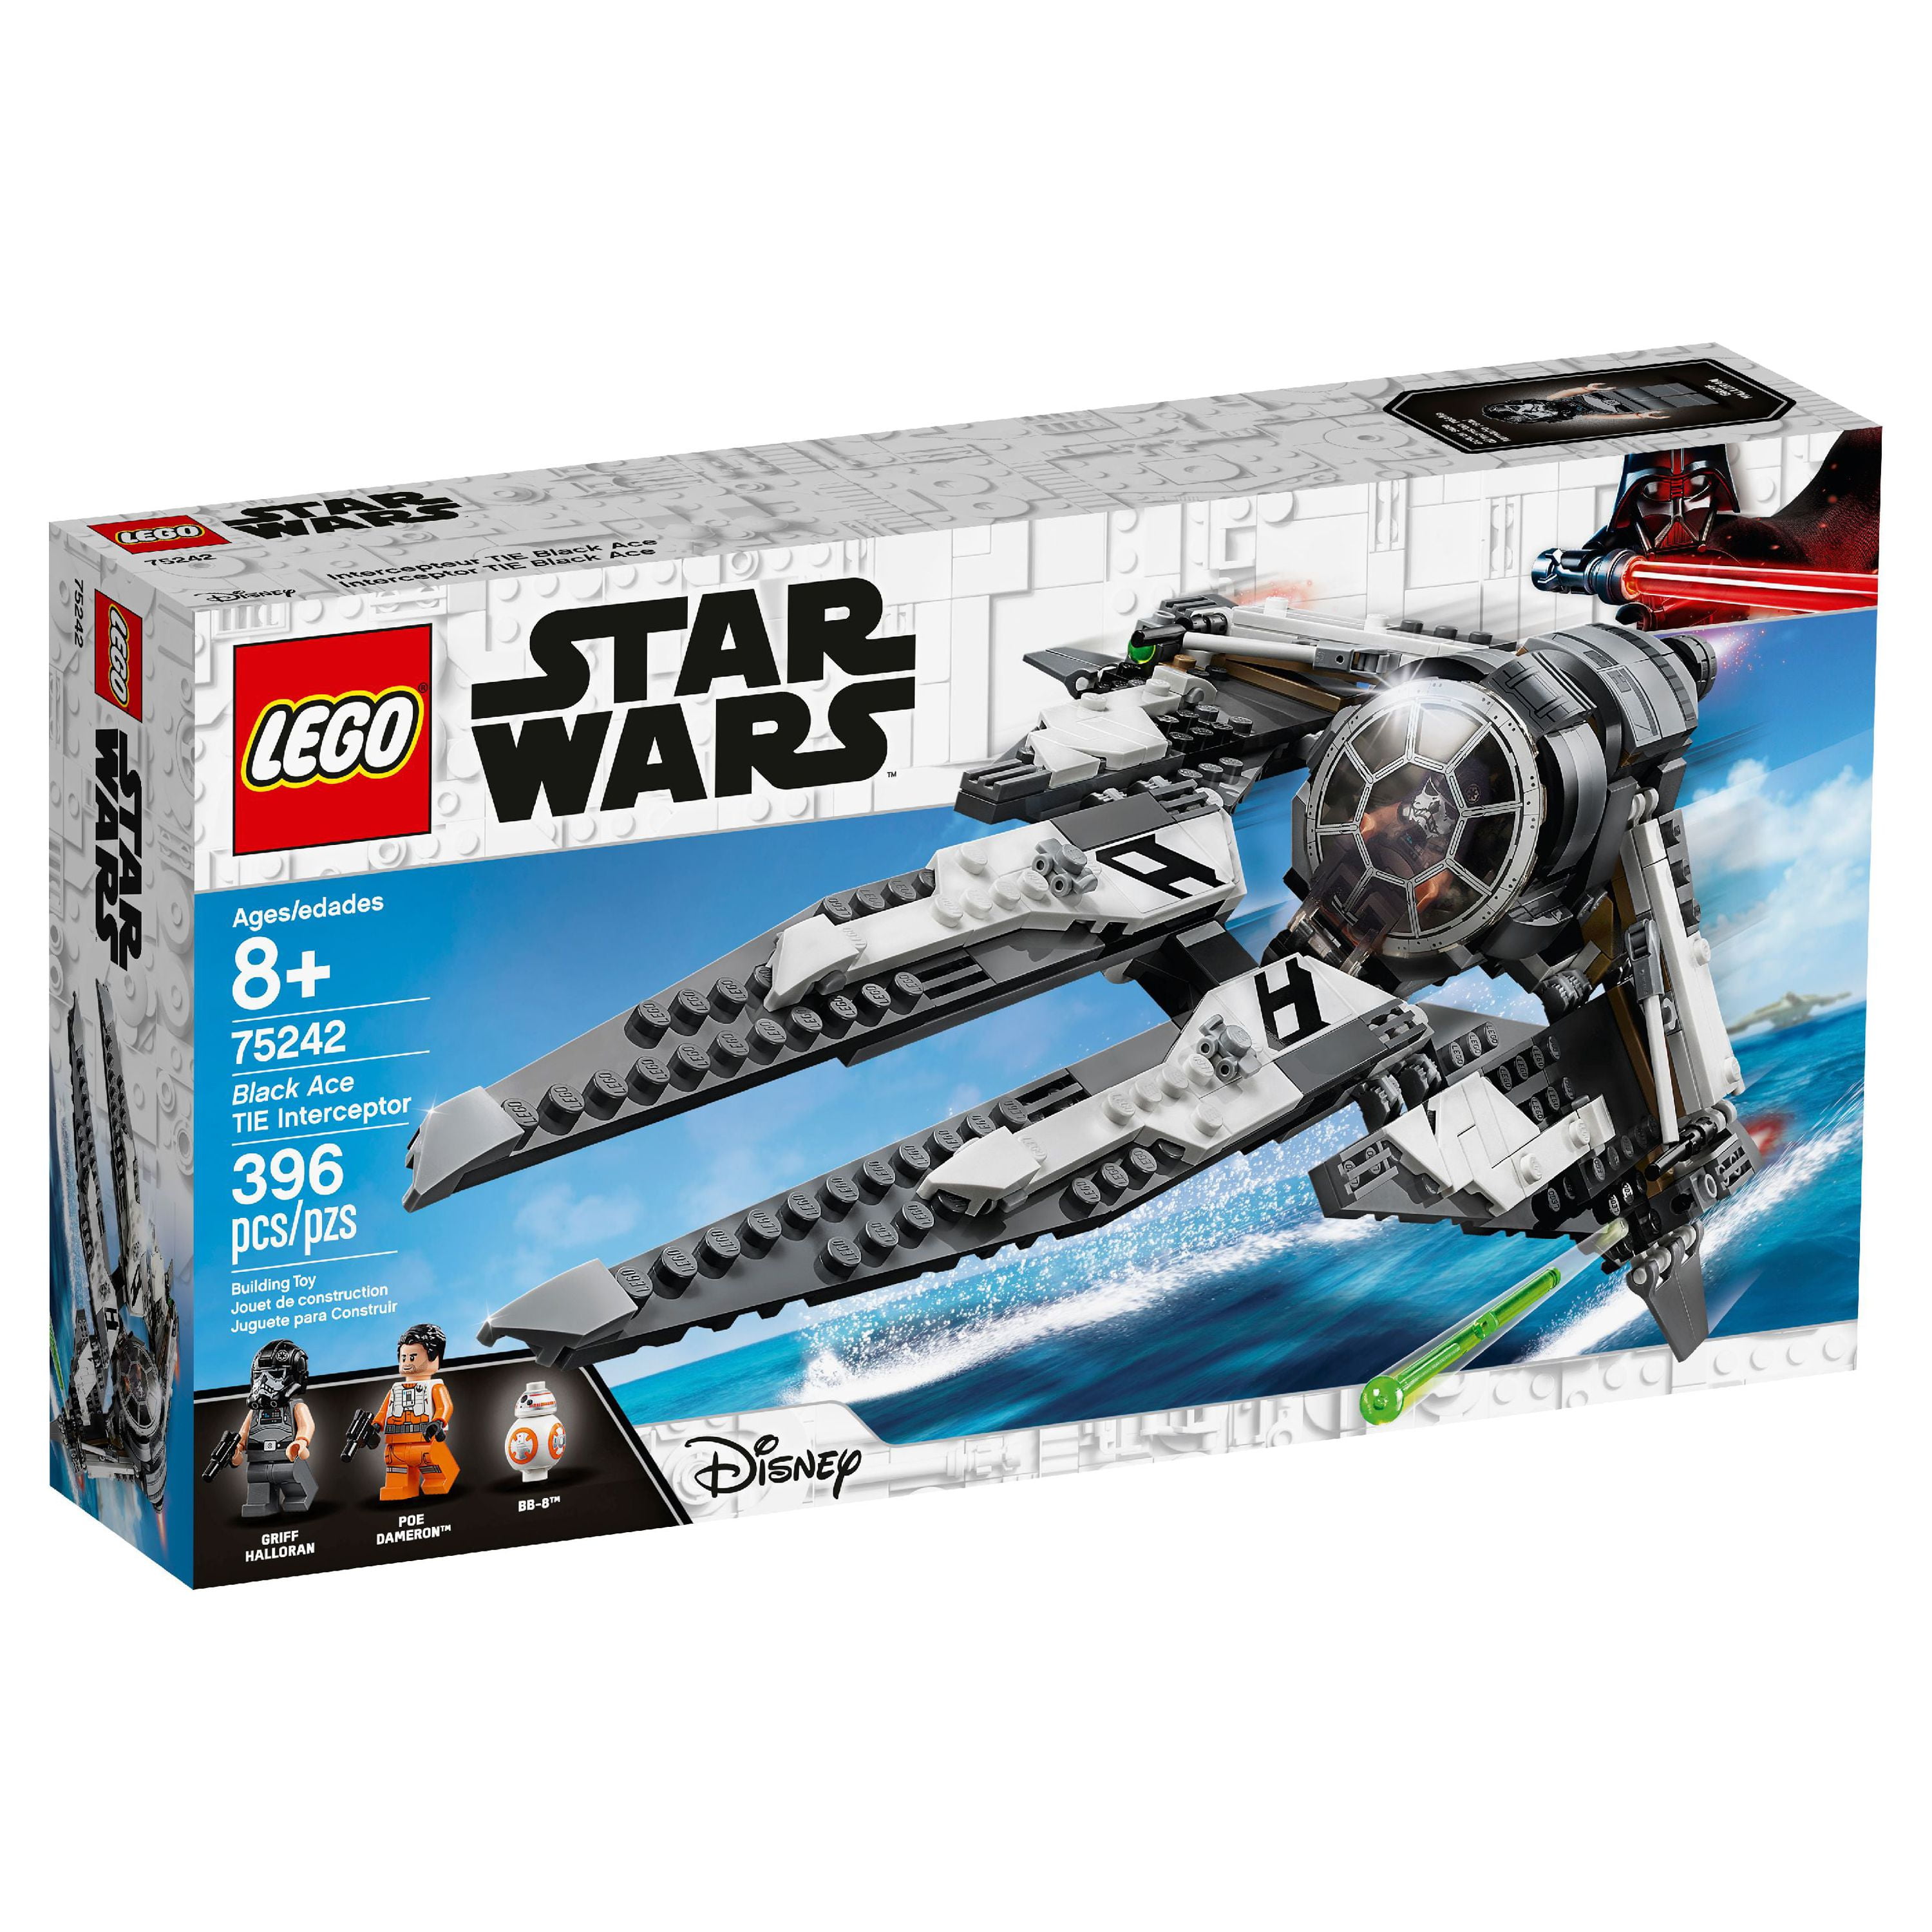 LEGO Star Wars : le set du vaisseau Black Ace TIE Interceptor va